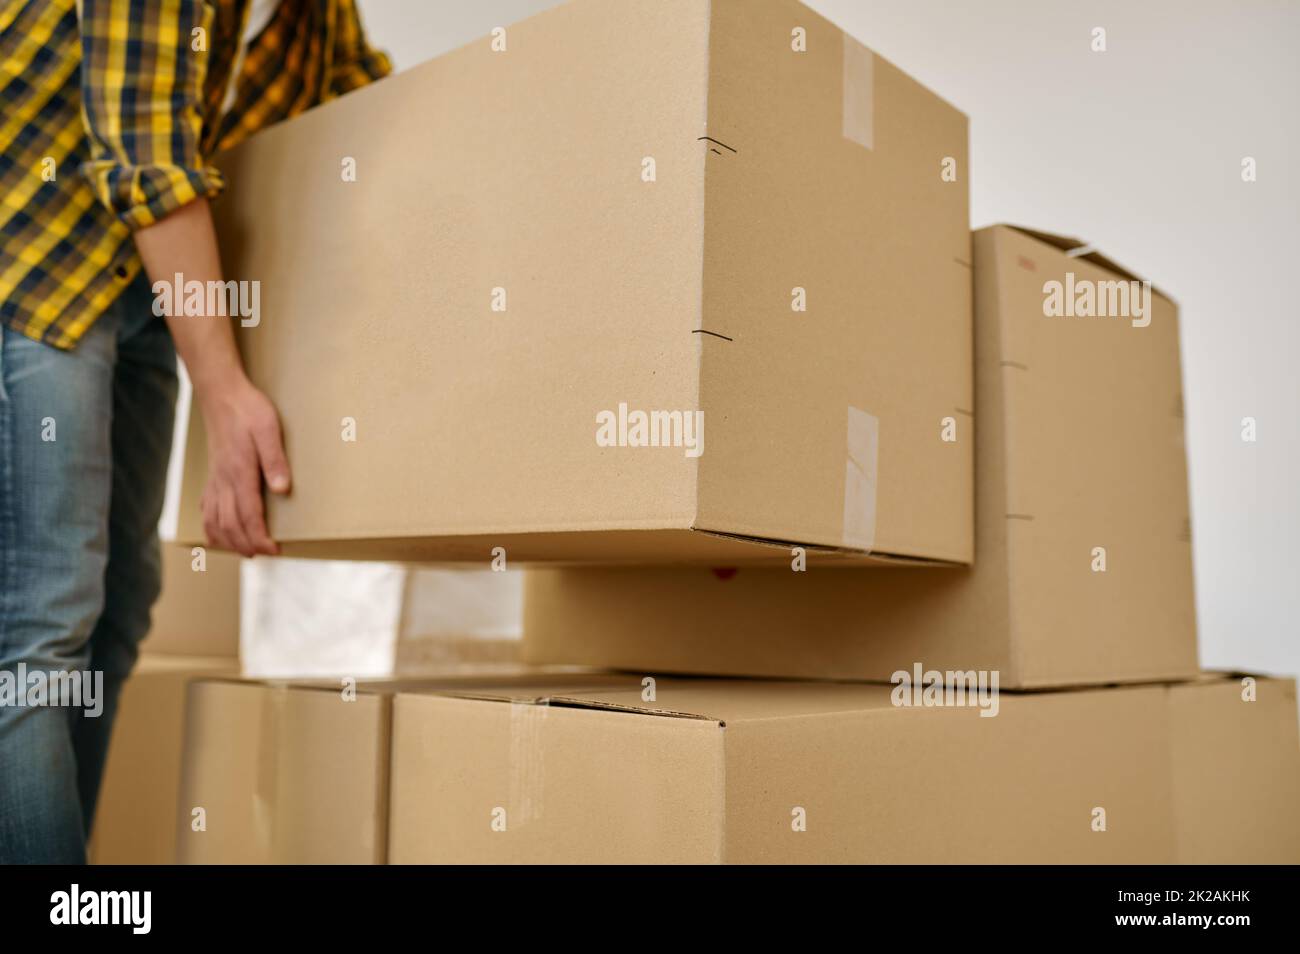 Closeup hand lifting box during home moving Stock Photo